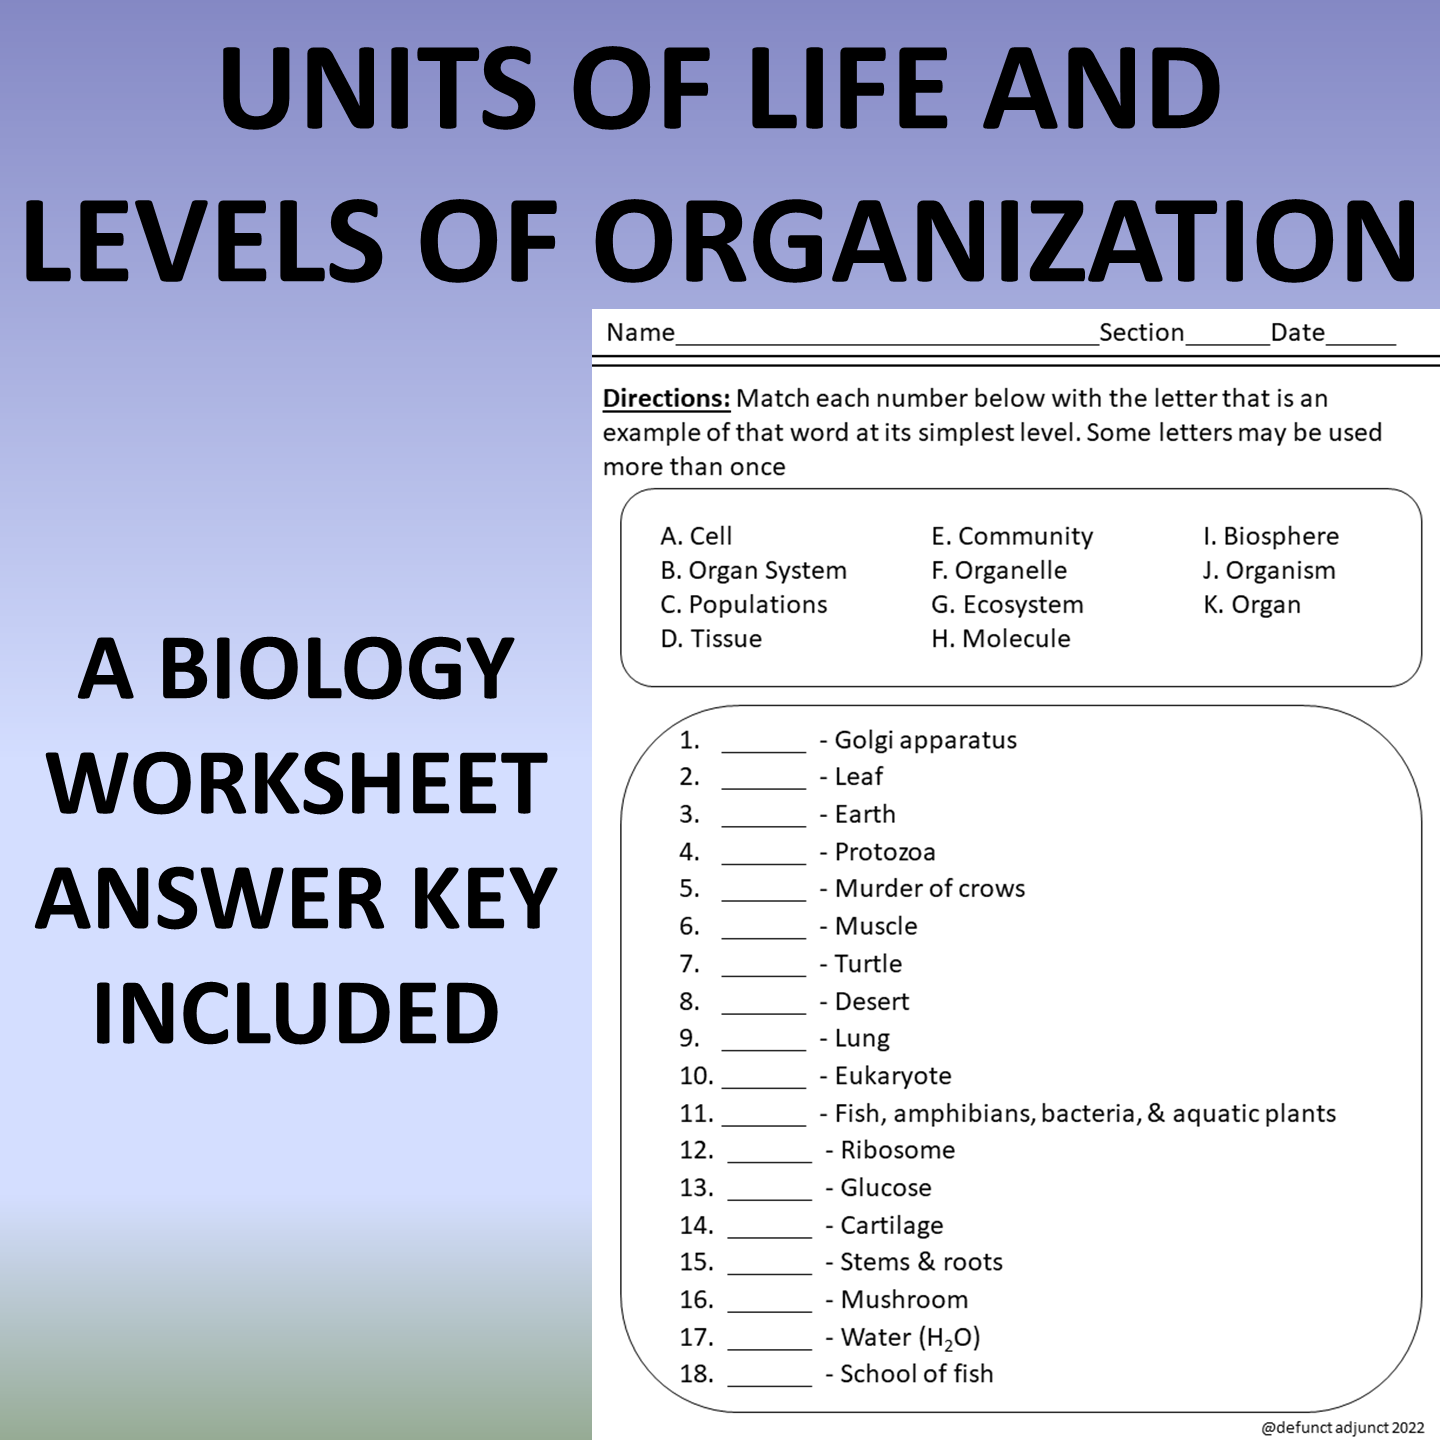 Levels of Organization of Life: A Biology Worksheet